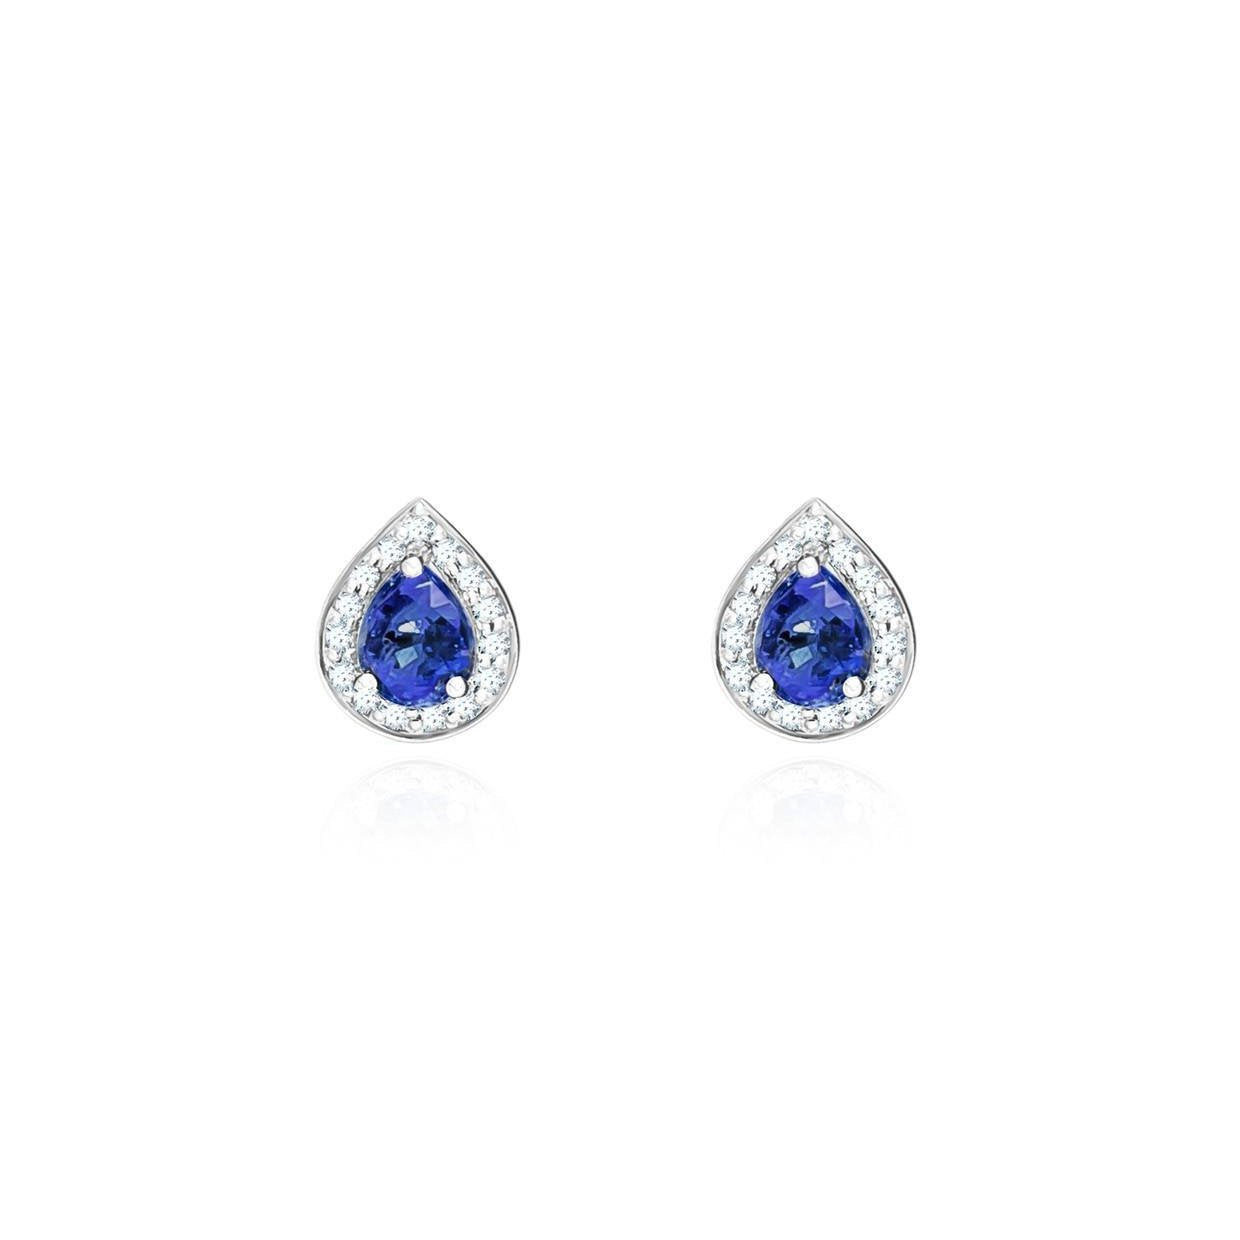 Ceylon Sapphire With Diamonds 3.40 Ct Studs Earrings White Gold 14K